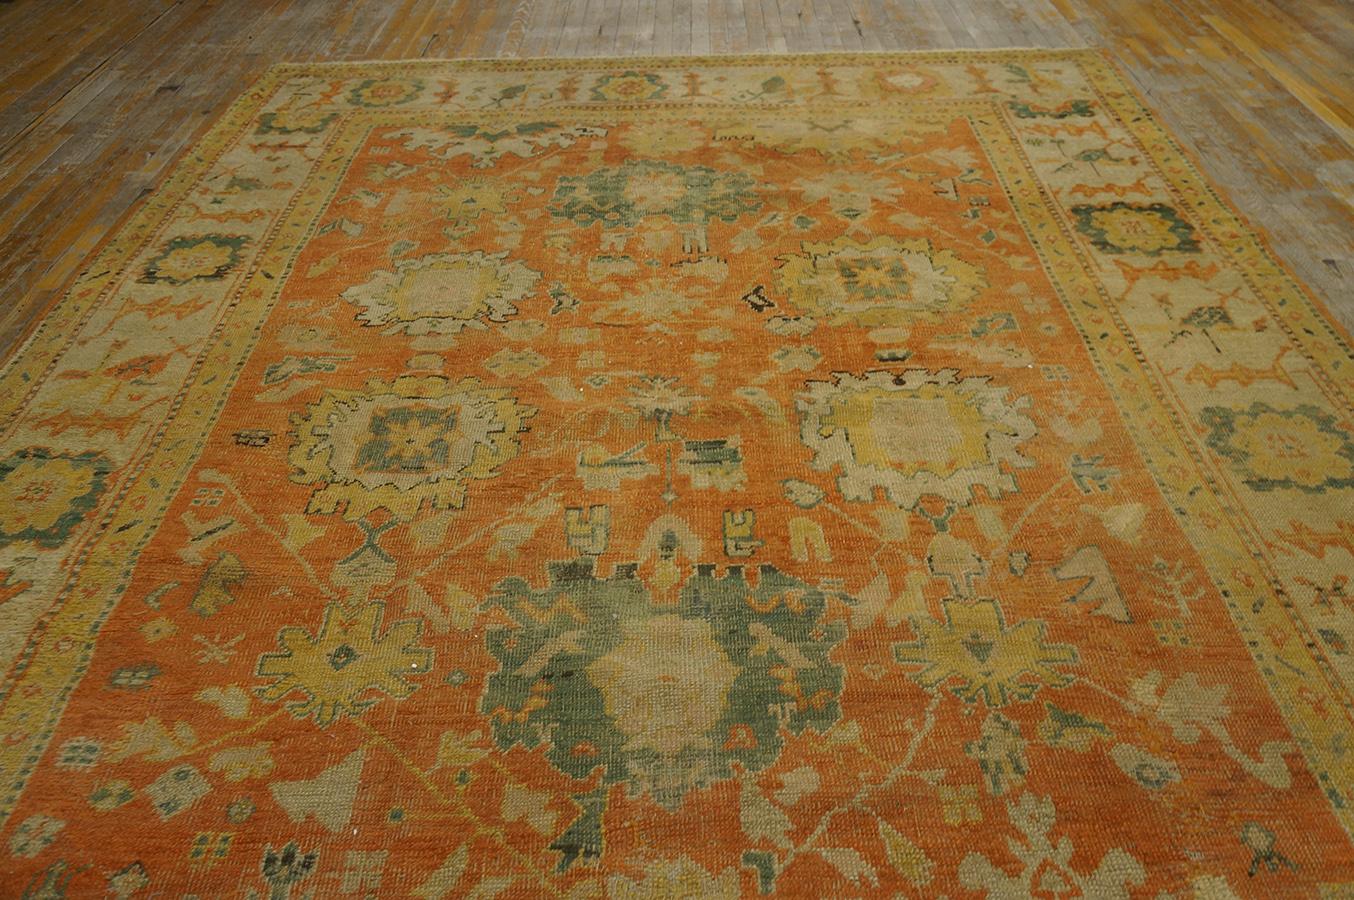 Late 19th Century Turkish Anatolian Oushak Carpet (8'4''x 11'2'' - 254 x 340 cm) For Sale 4